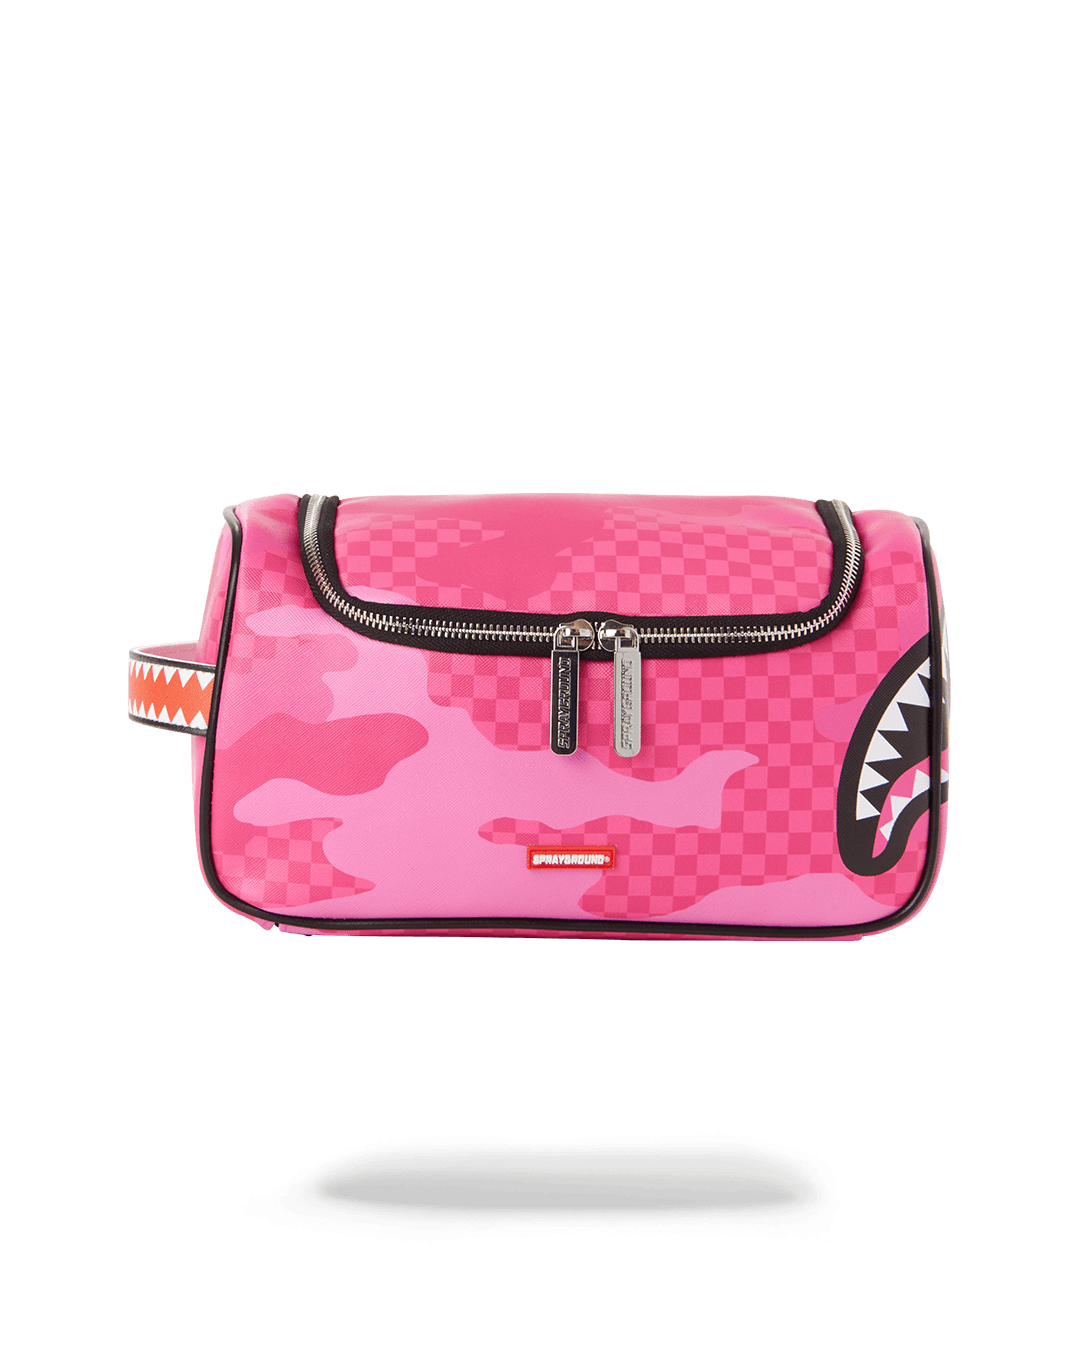 Sprayground Anime Camo Backpack